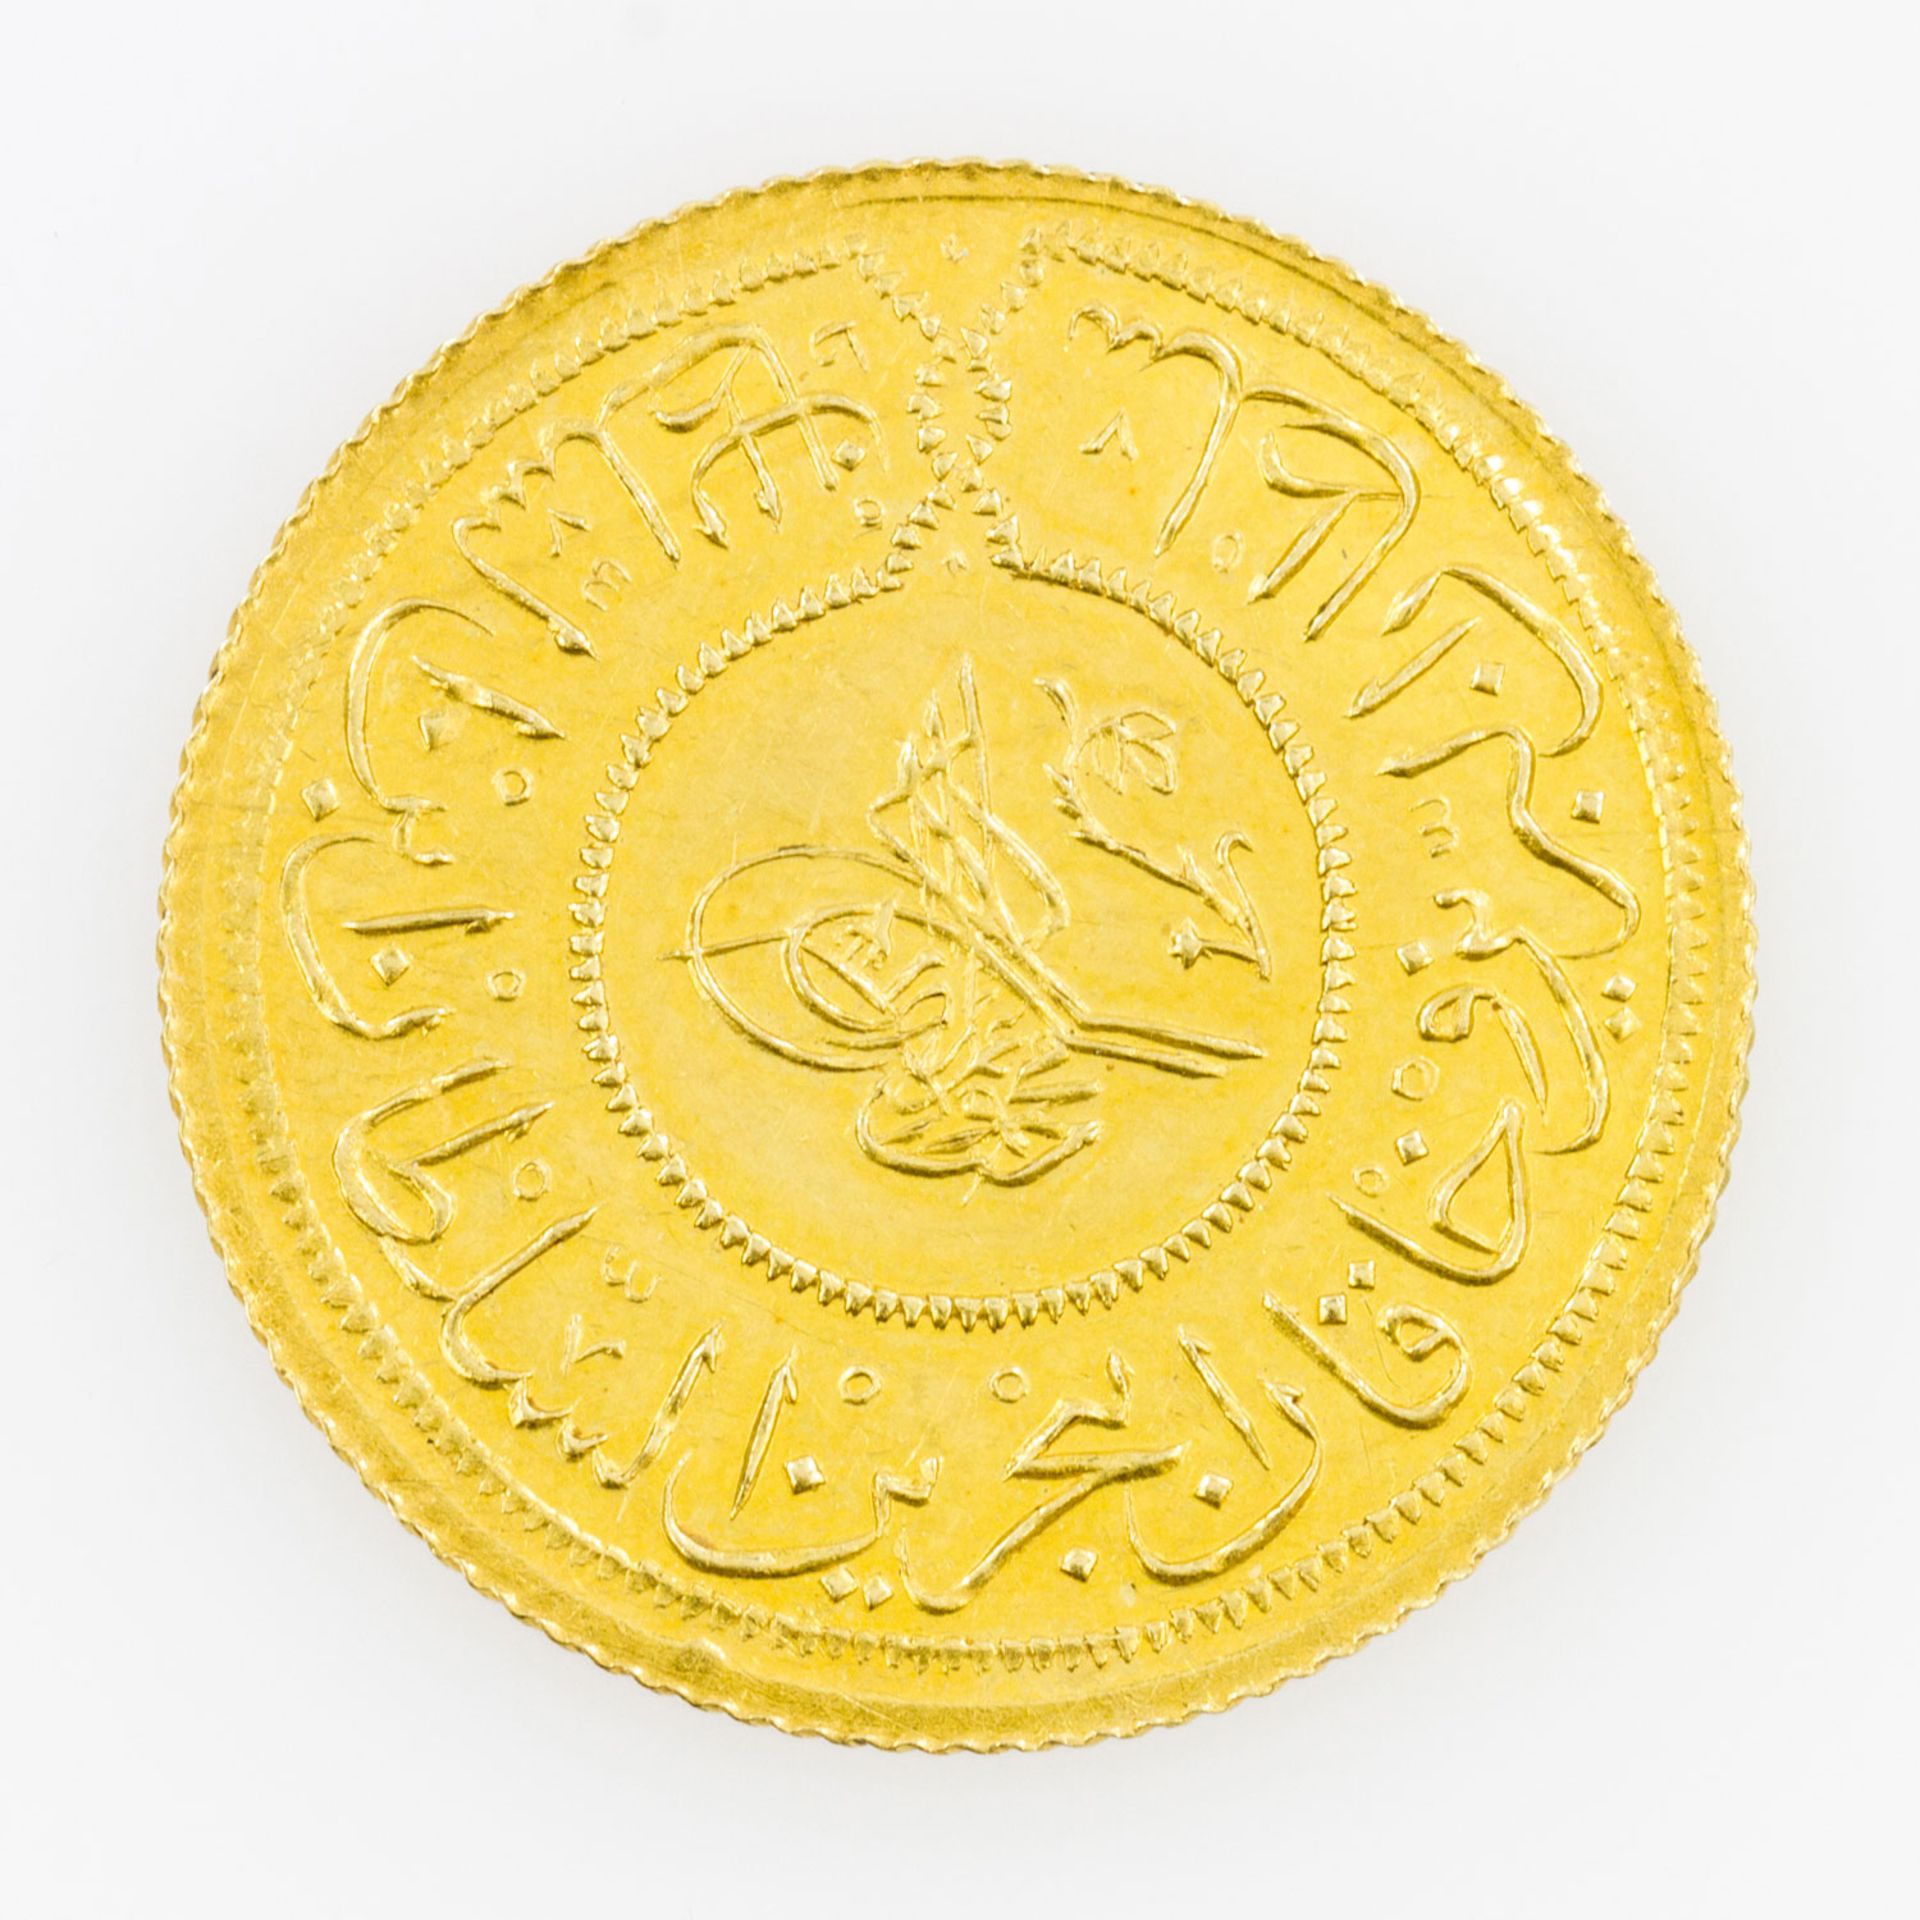 Türkei/Gold - Doppelter neuer Rumi-Altin 1817/Konstantinopel, Mahmud II., vz-stgl., KM 617, 4,14g